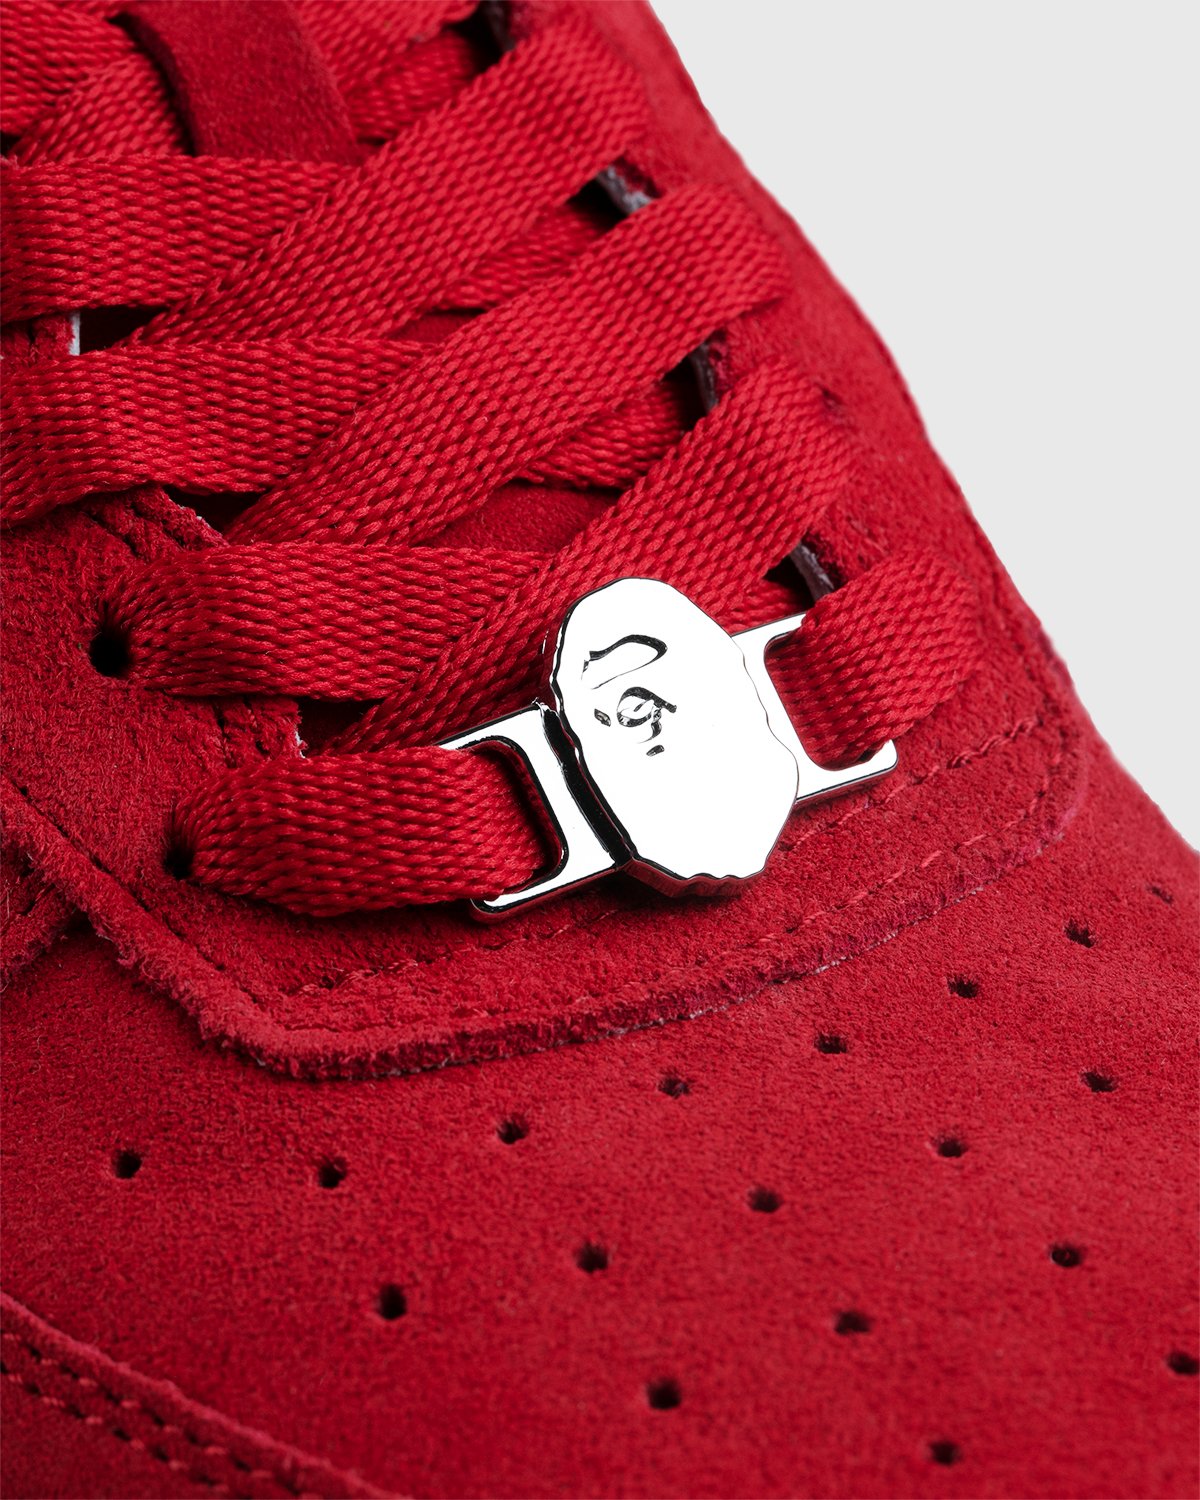 BAPE x Highsnobiety - BAPE STA Red - Footwear - Red - Image 6